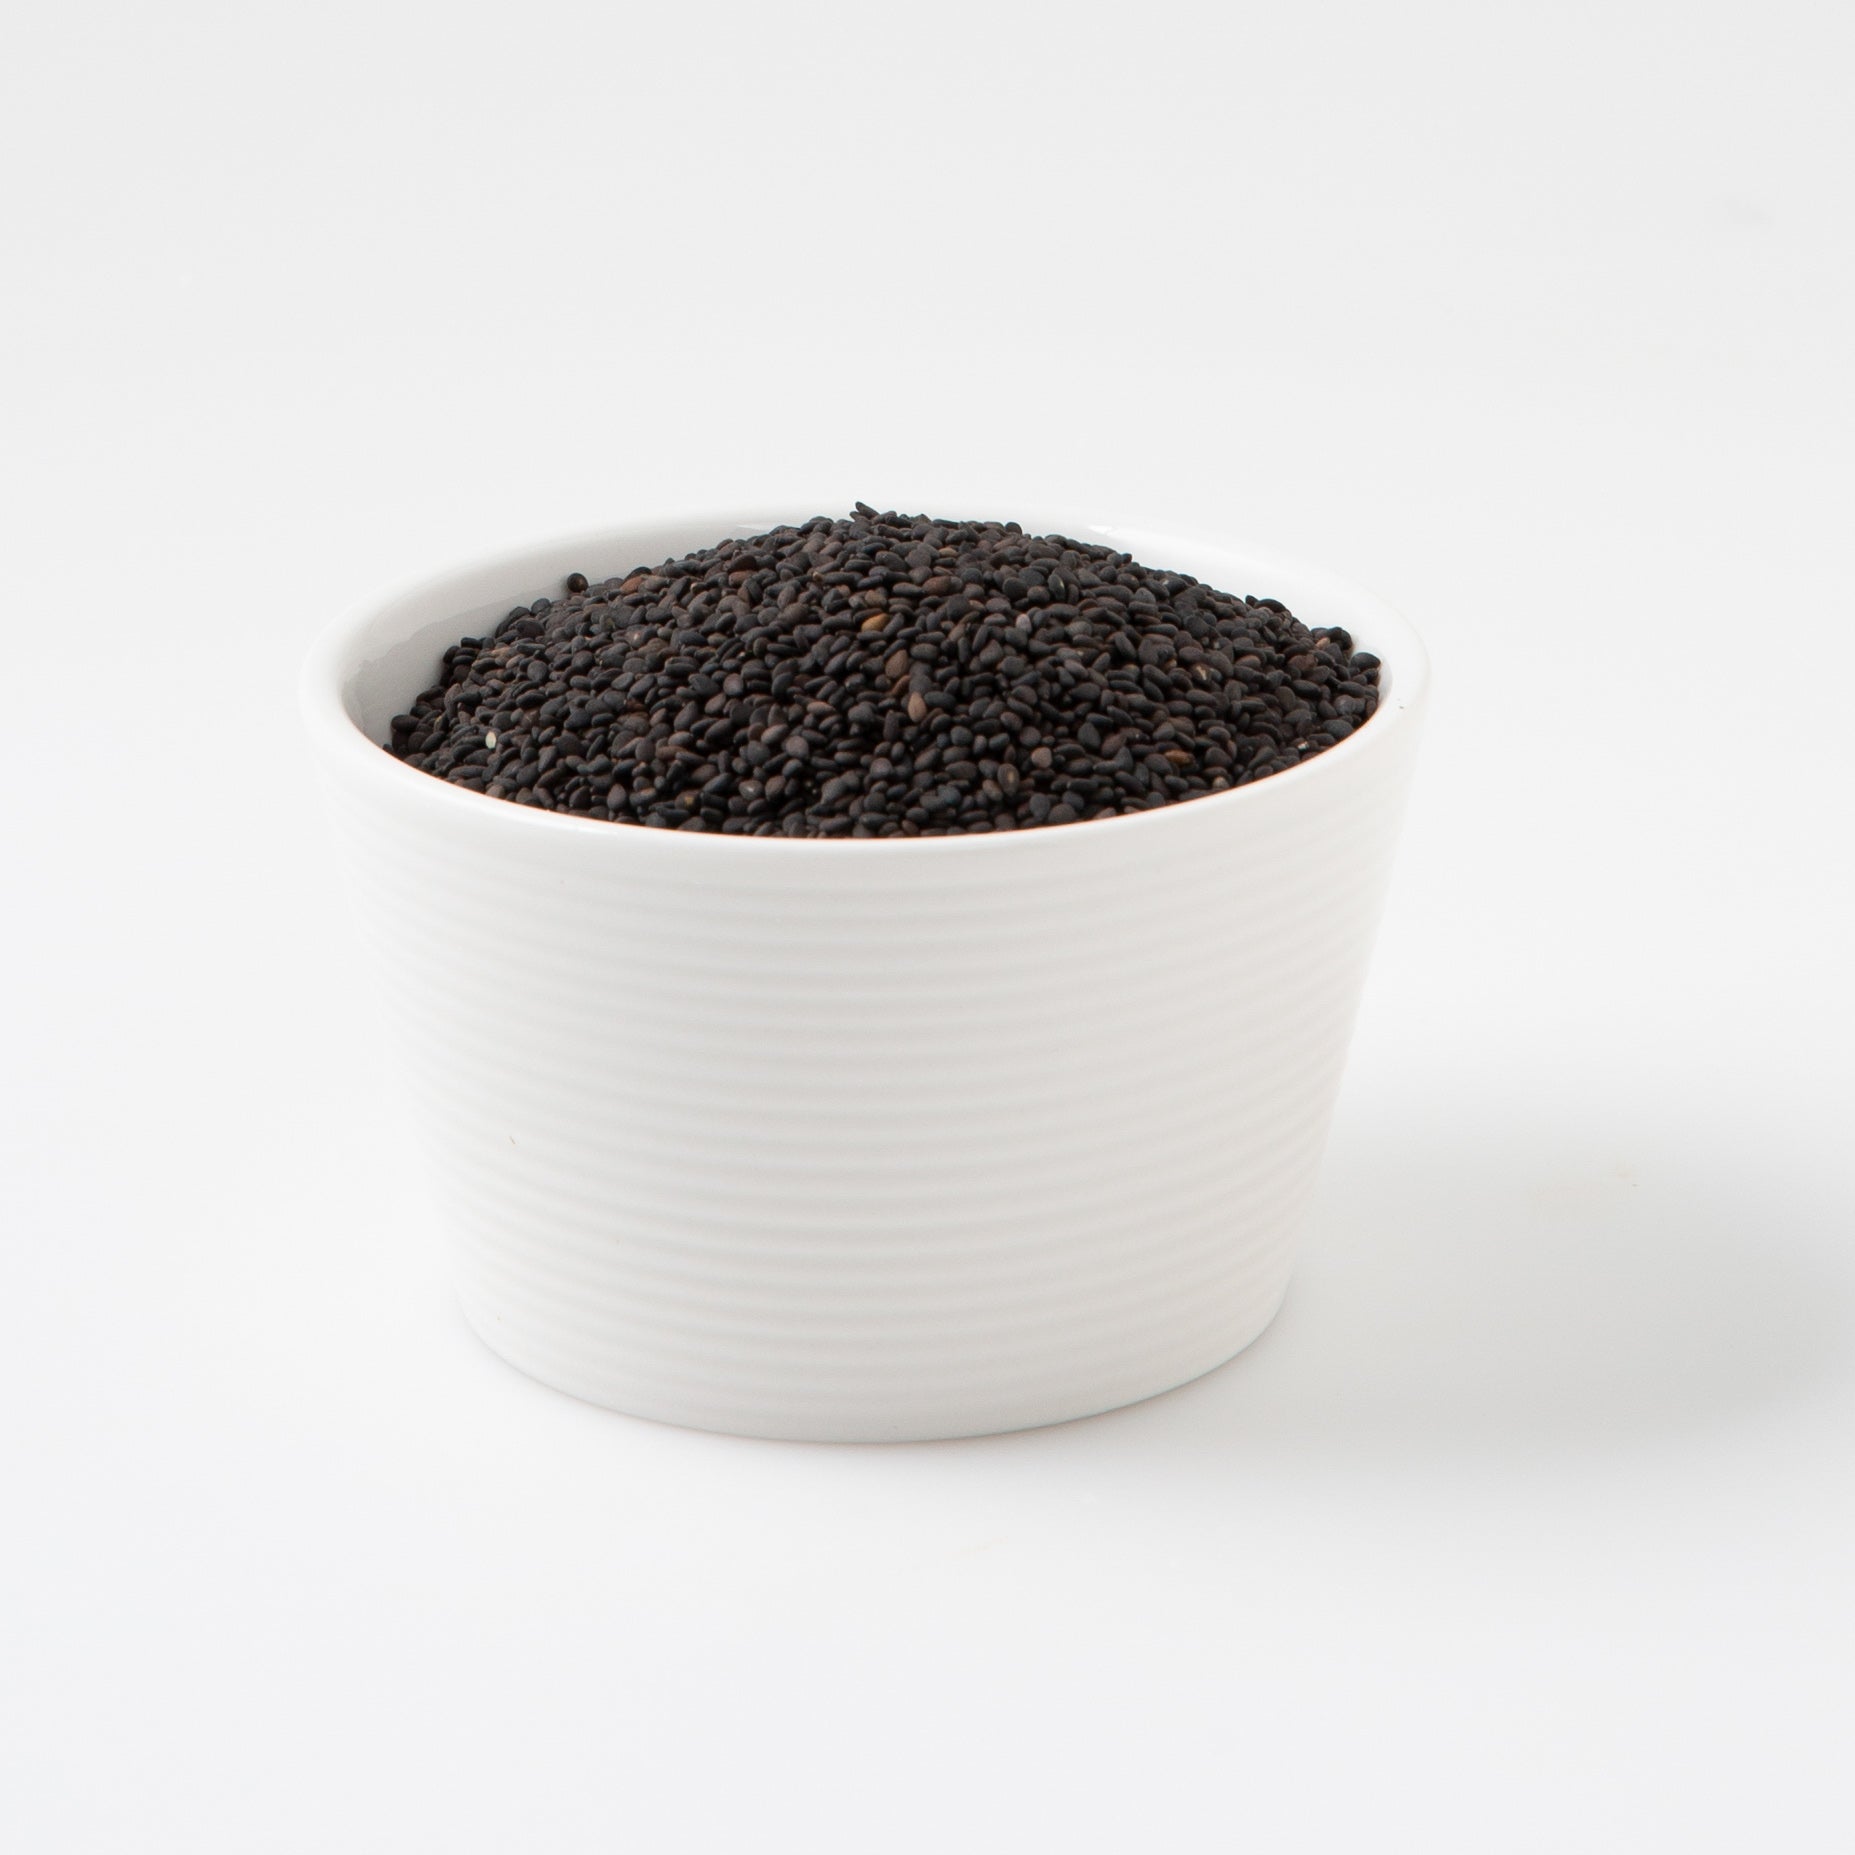 Organic Black Sesame Seeds (Seeds) Image 3 - Naked Foods